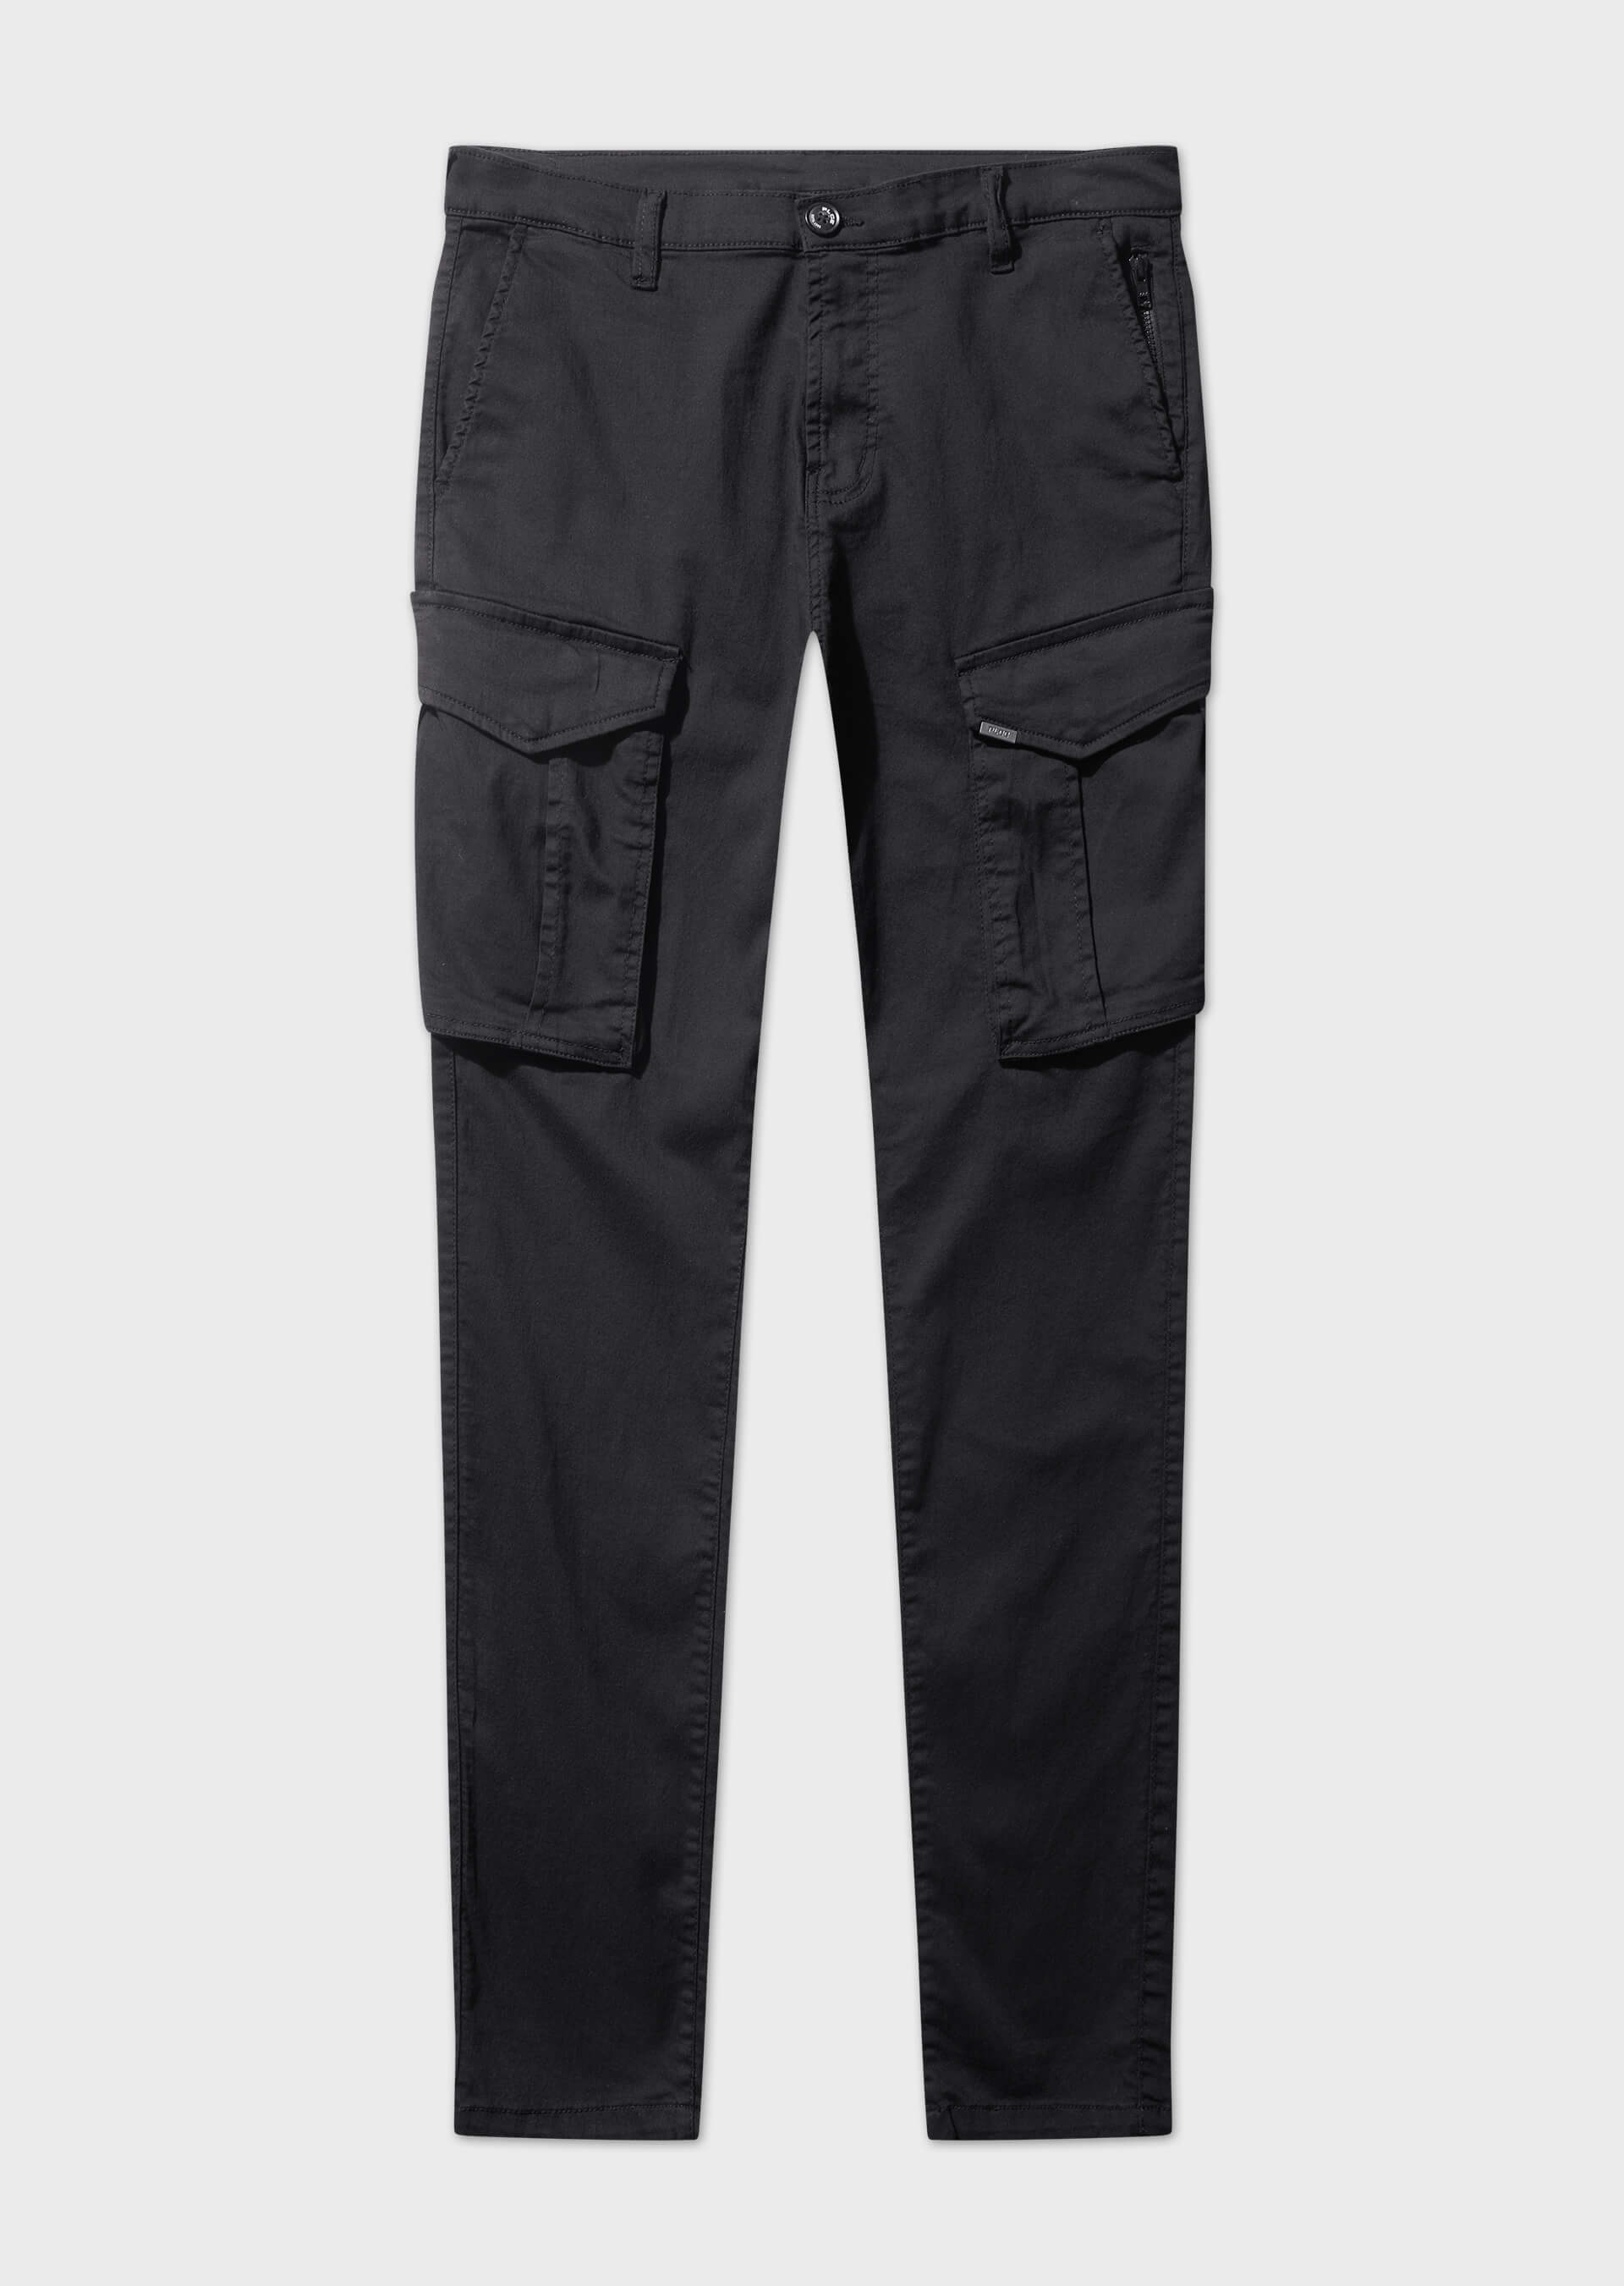 Source OEM Low Waist Side Adjustable Strap Flag Pocket Cargo Trousers Pants  Women on malibabacom